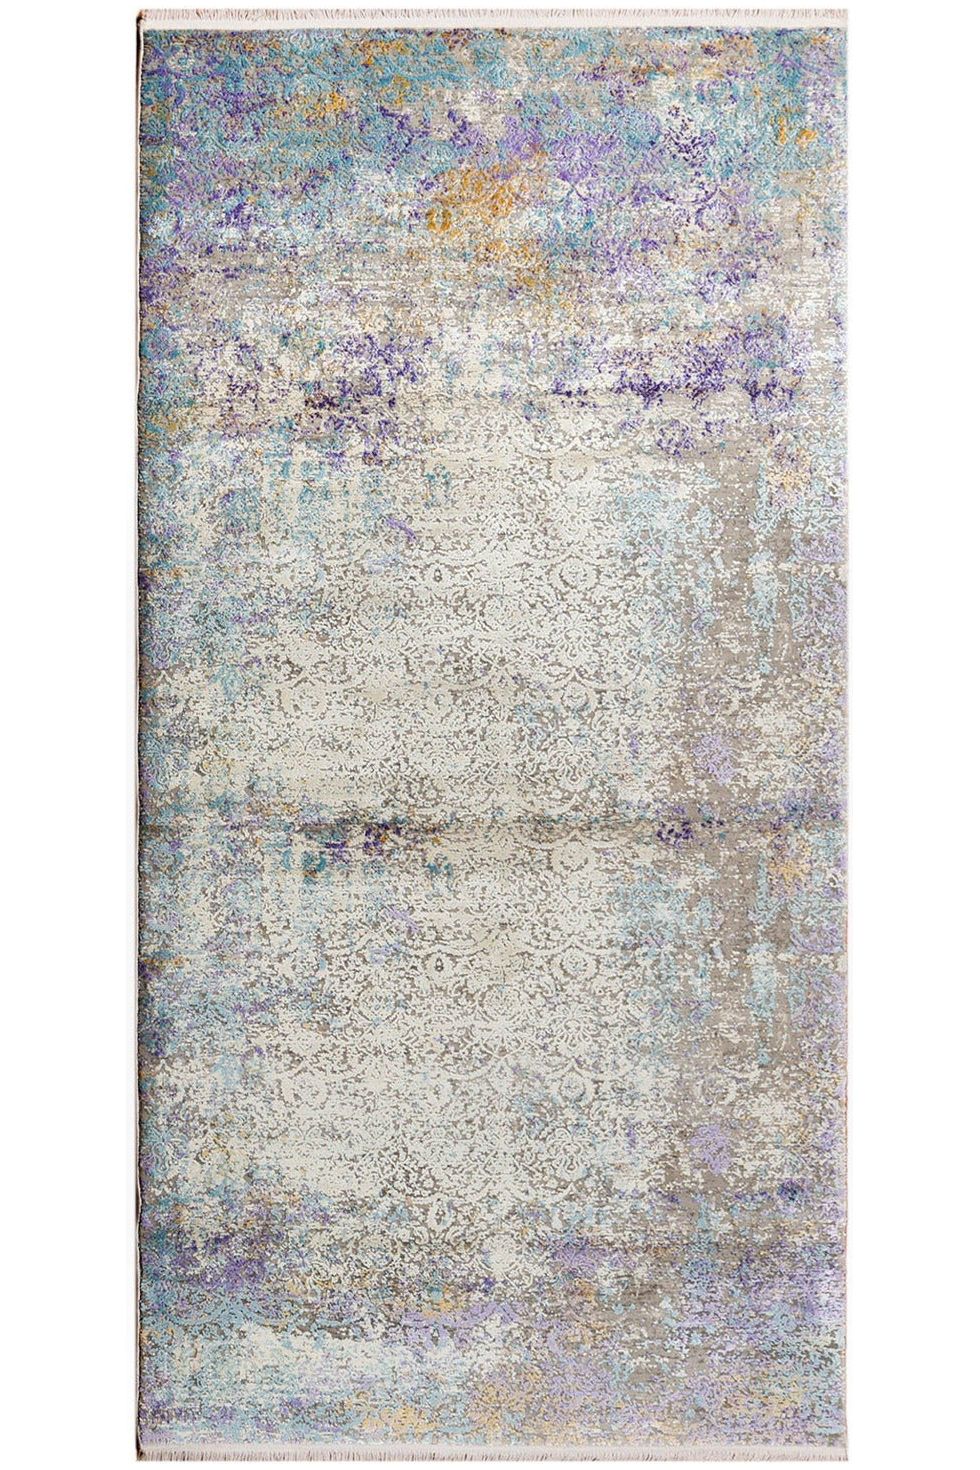 #Turkish_Carpets_Rugs# #Modern_Carpets# #Abrash_Carpets#Abrash-18009455-200x100